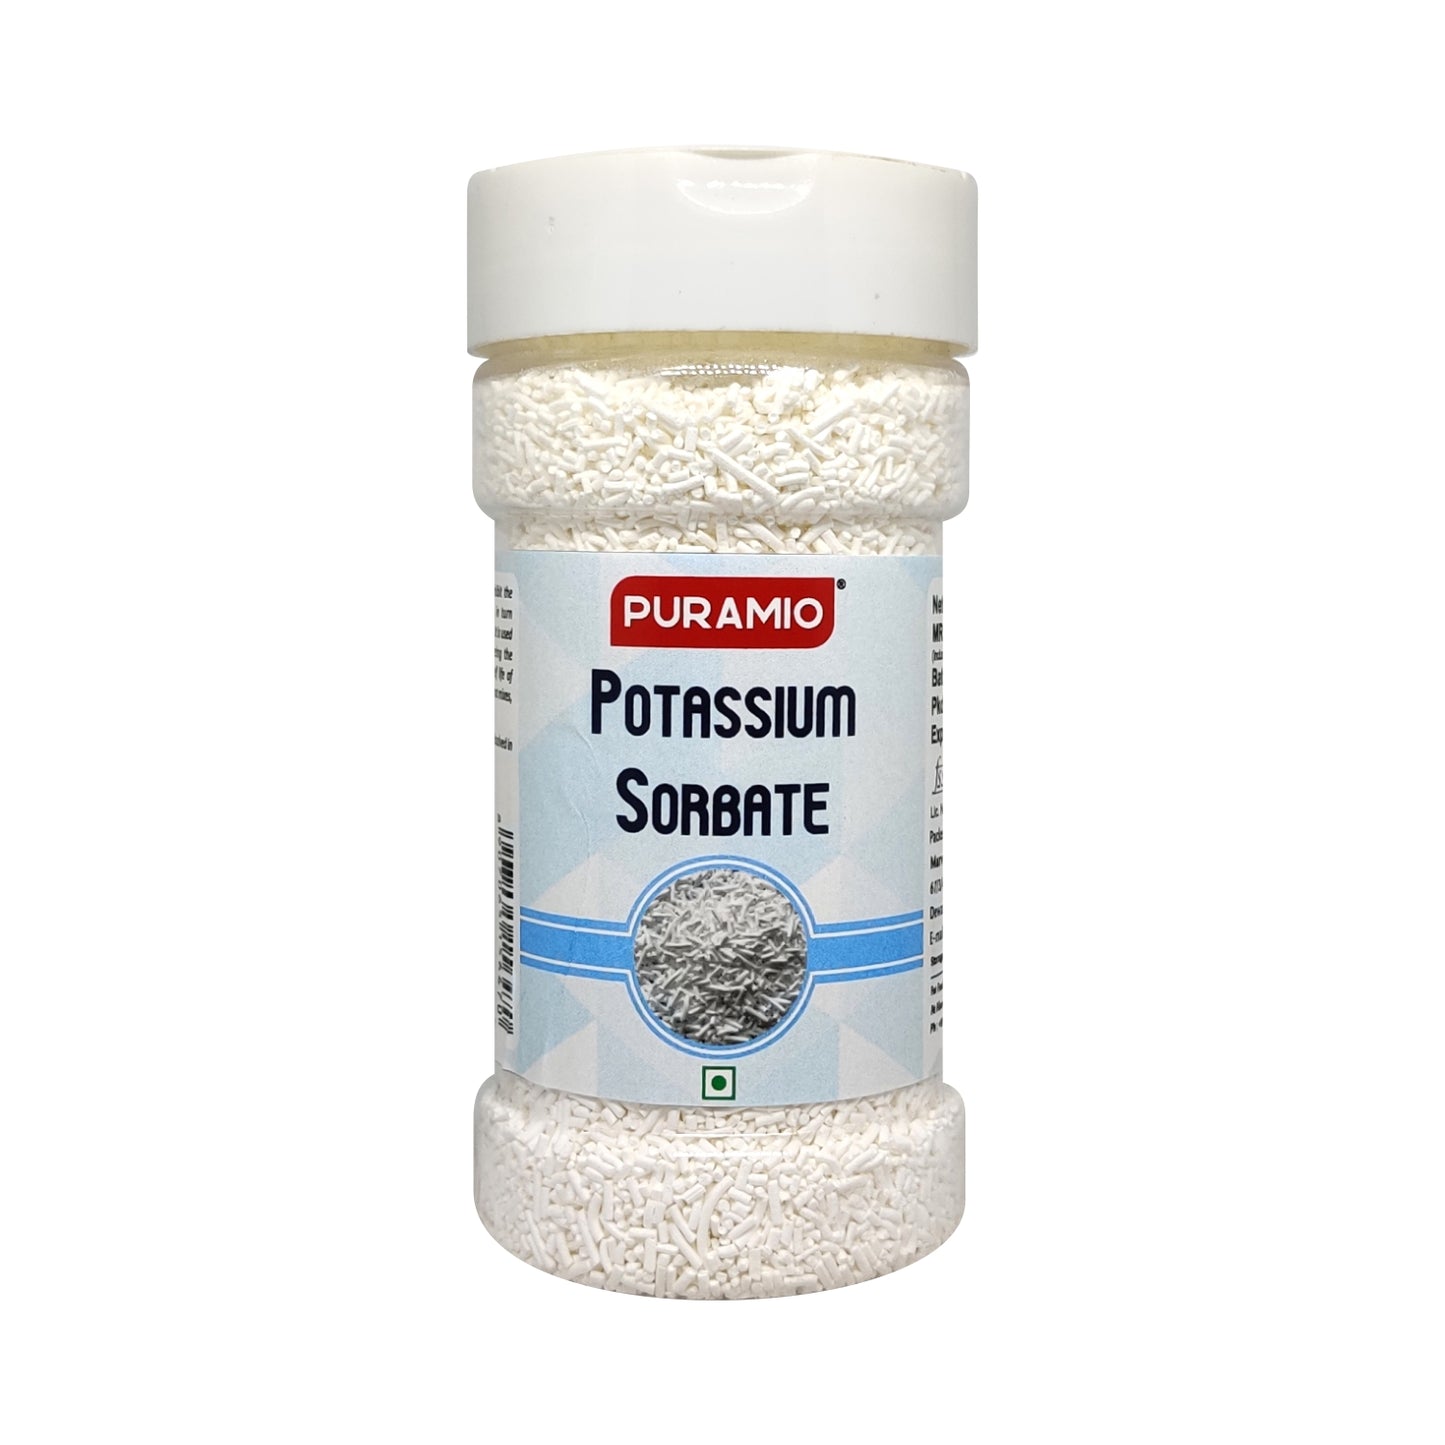 Puramio Potassium Sorbate